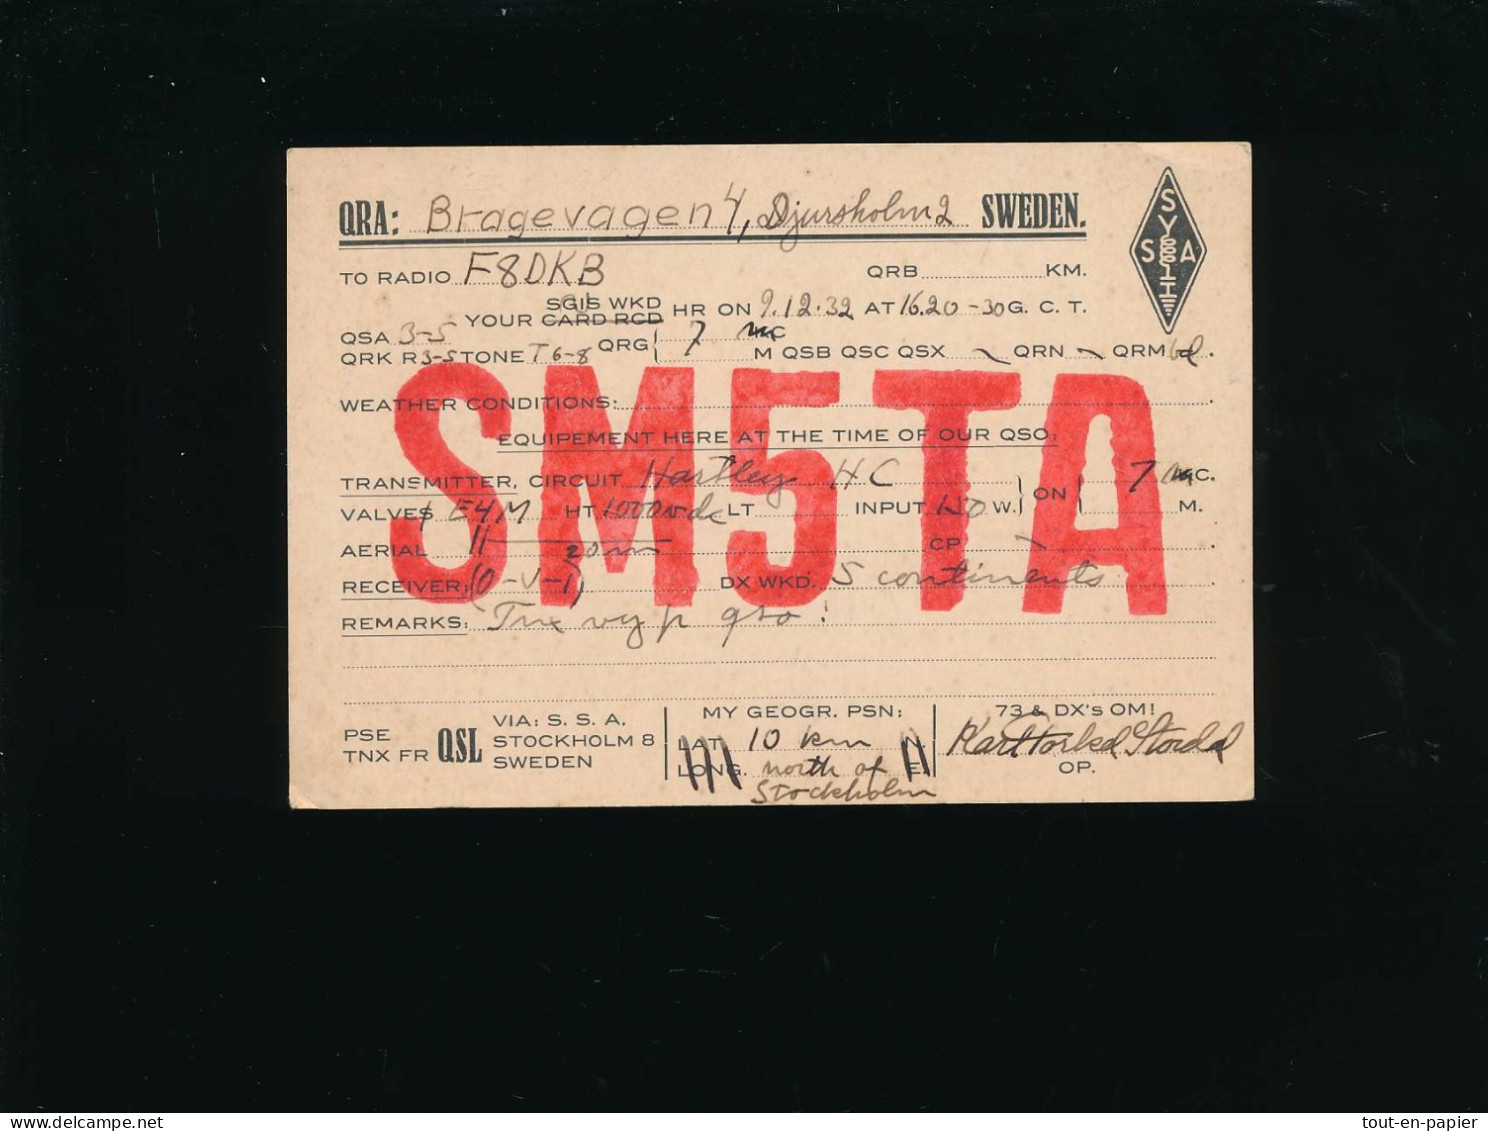 QSL Carte Radio - 1932 - Suède Sweden- SM5TA  Vers France - Radio-amateur